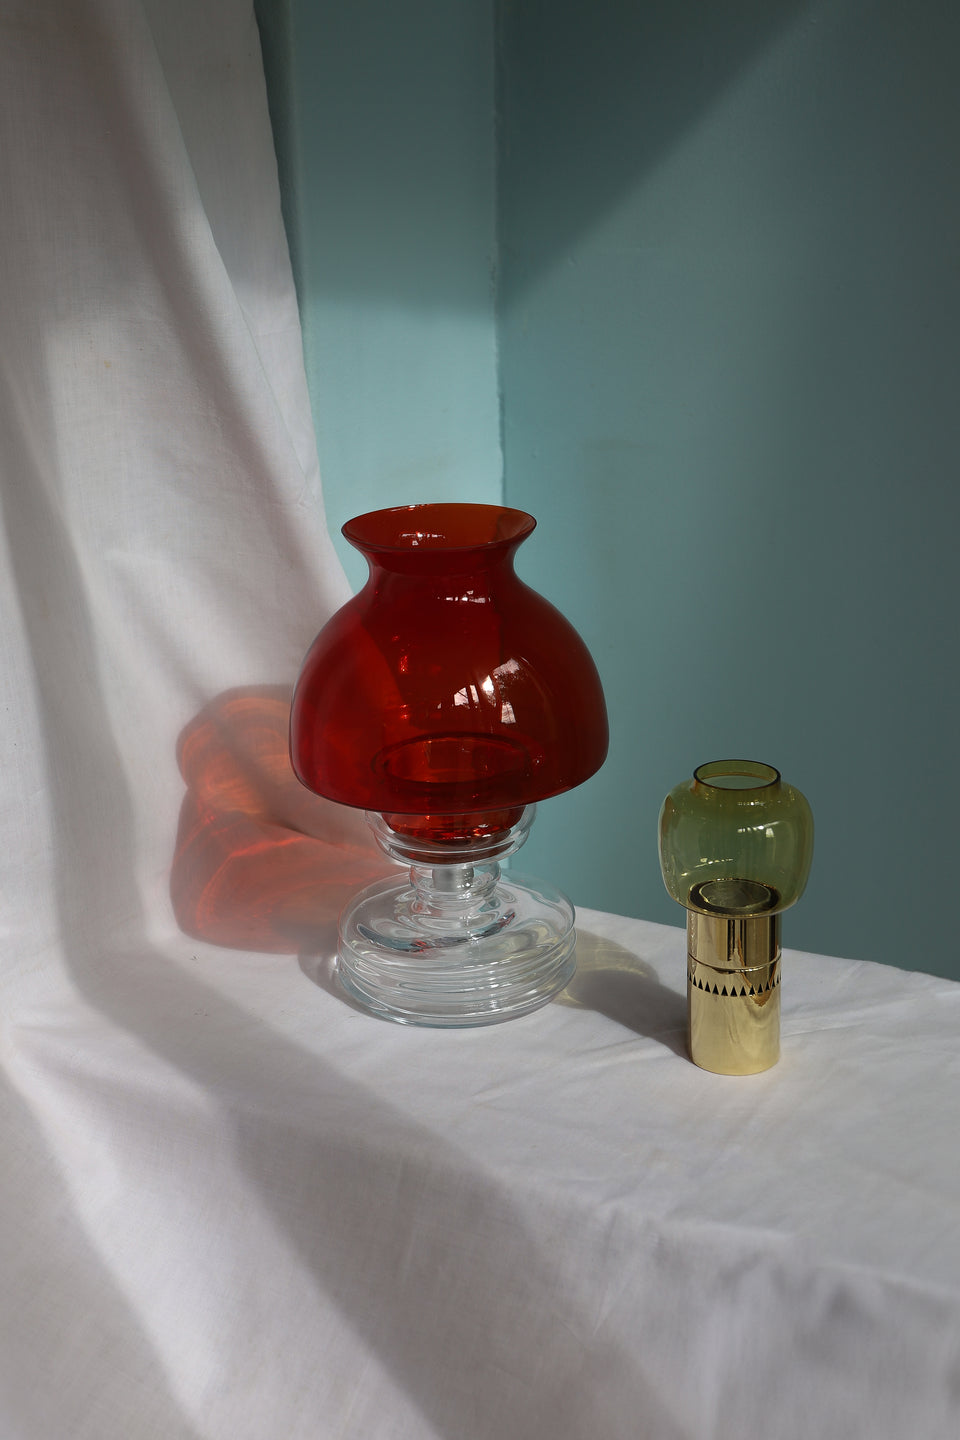 Scandinavian Vintage Glass Candle Holder/北欧ヴィンテージ キャンドルホルダー ガラス 燭台 ミッドセンチュリー